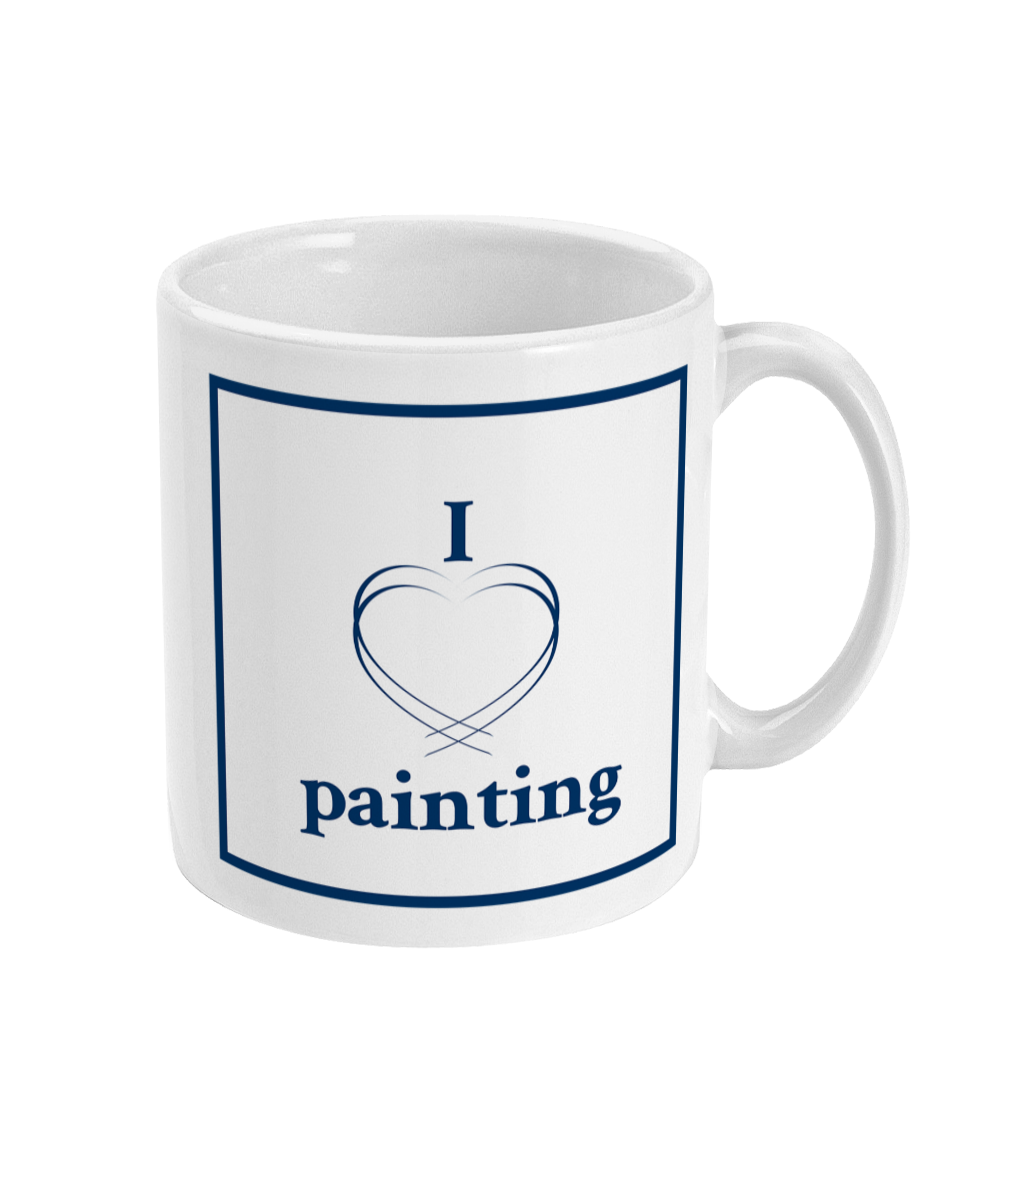 mug with I love painting printed on it